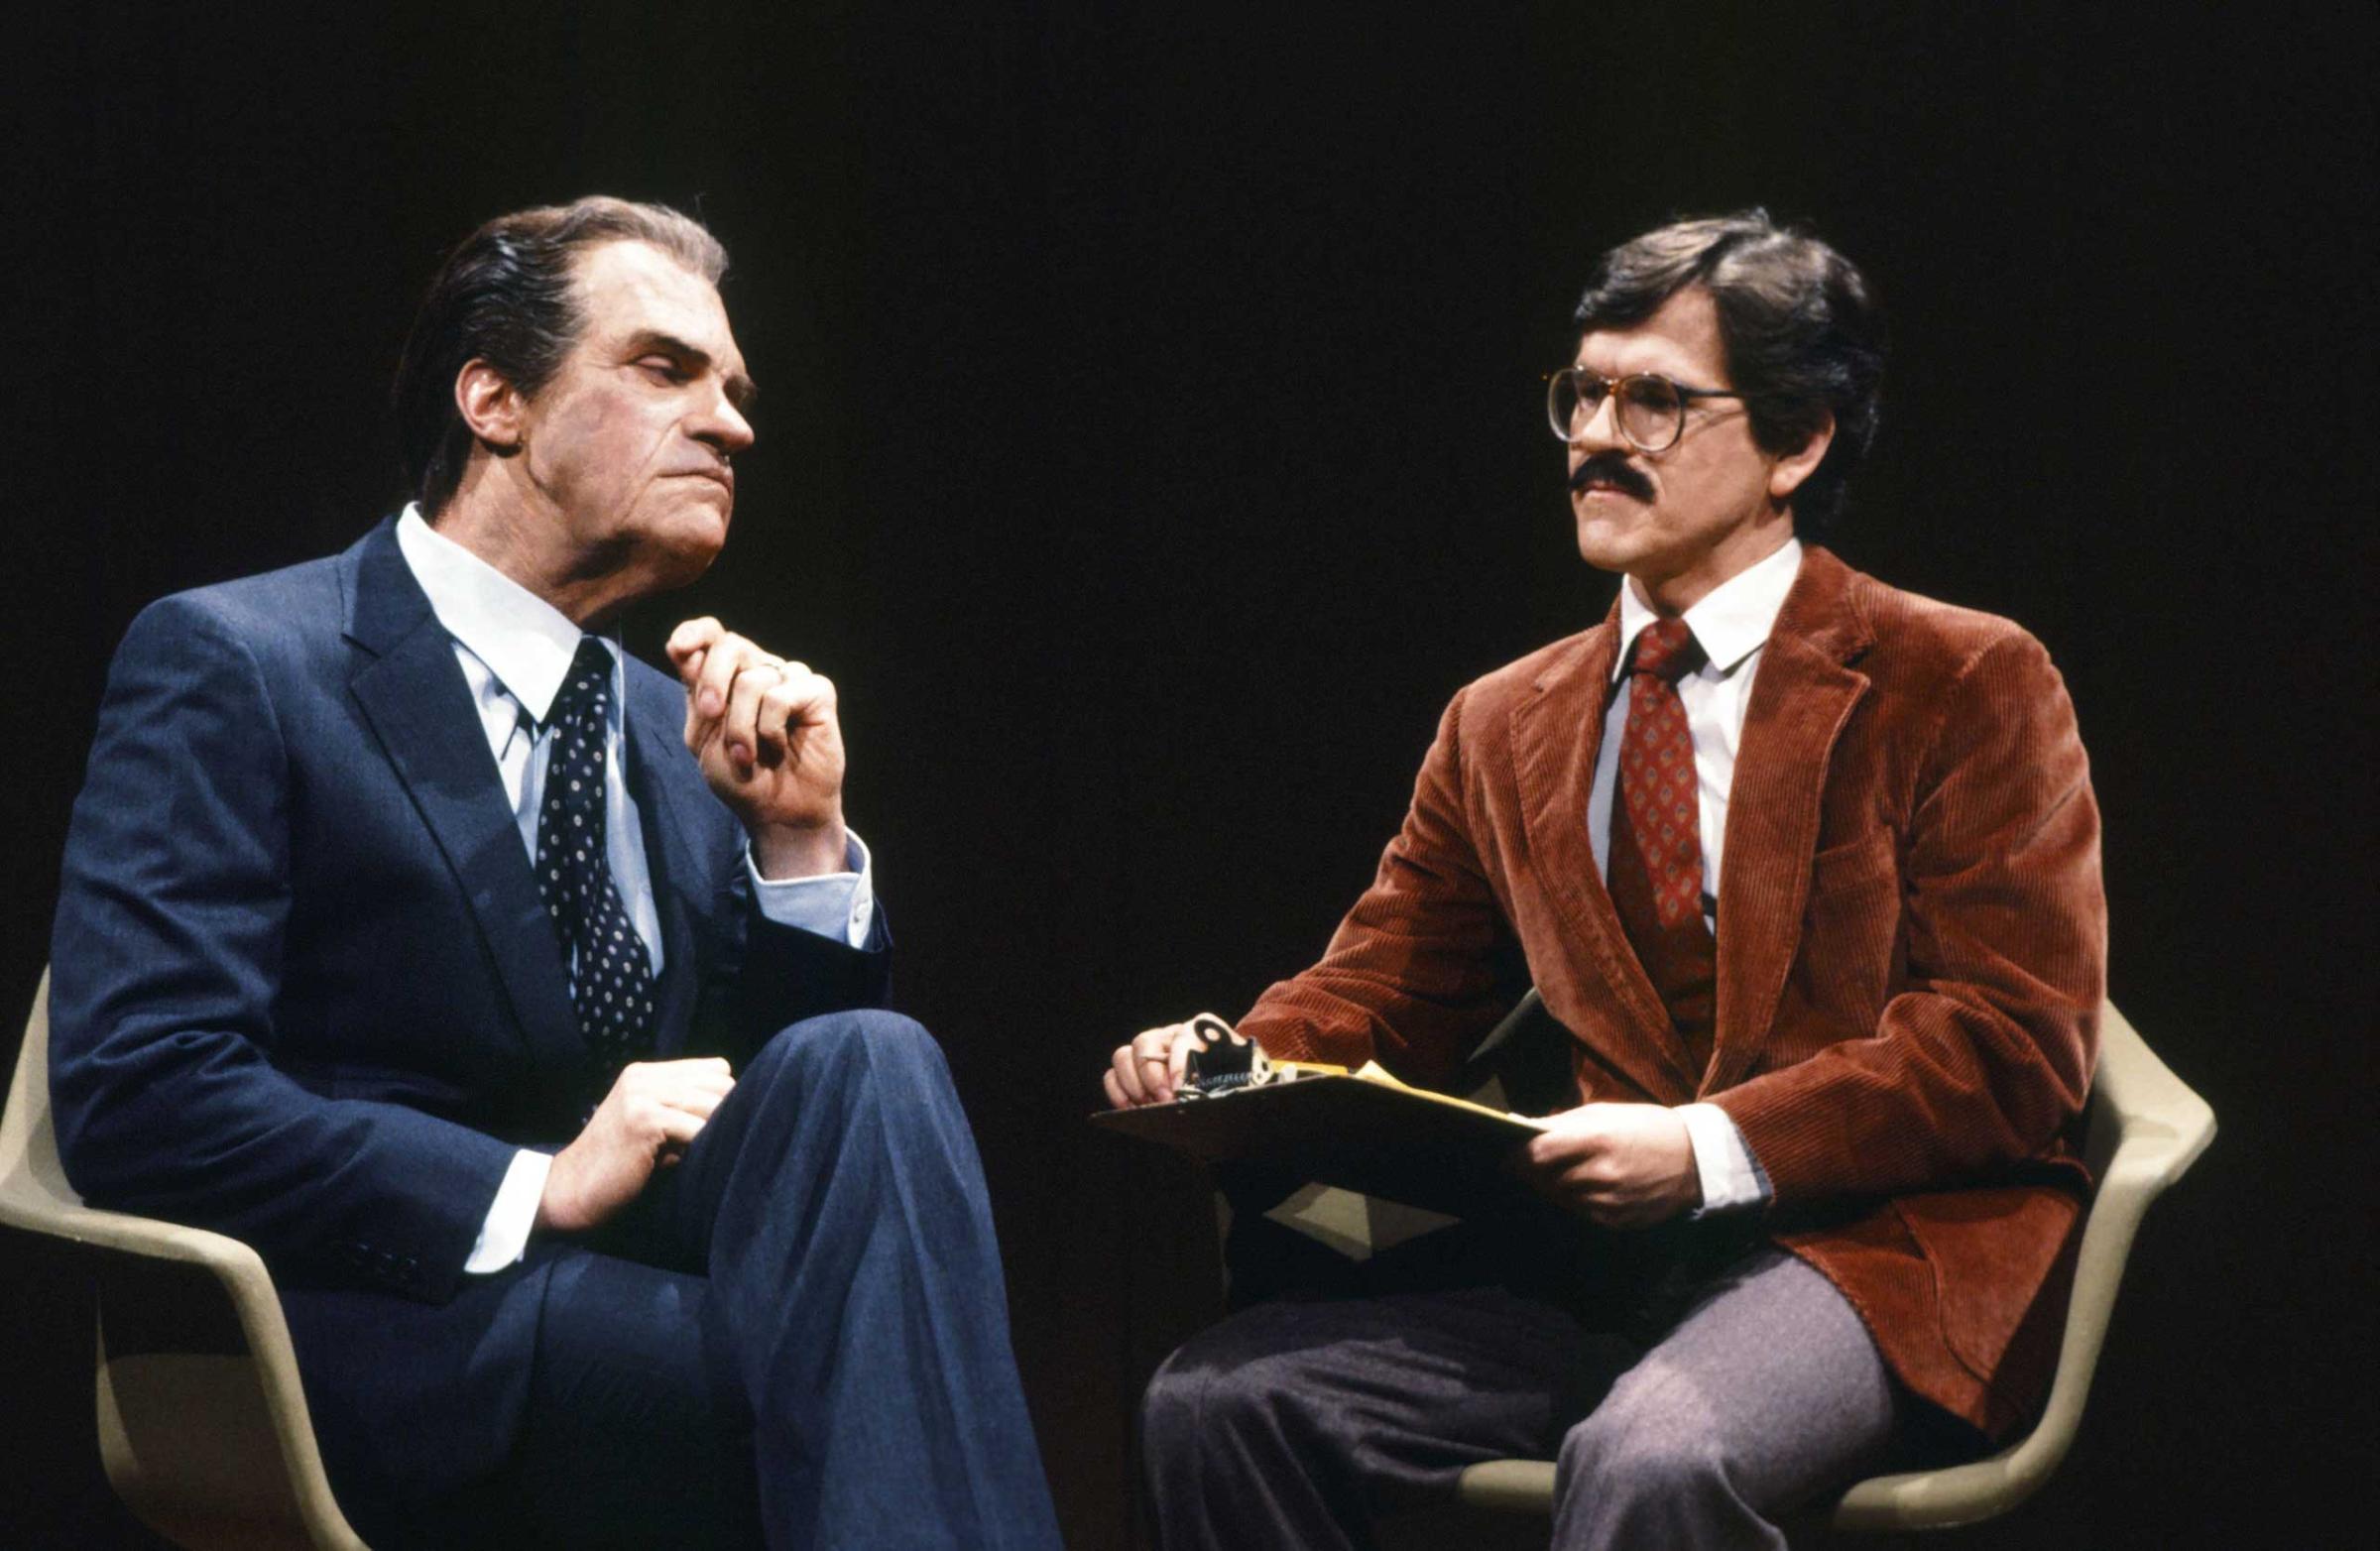 Joe Piscopo as President Richard Nixon and Tim Kazurinsky during the '60 Minutes' skit on April 14, 1984